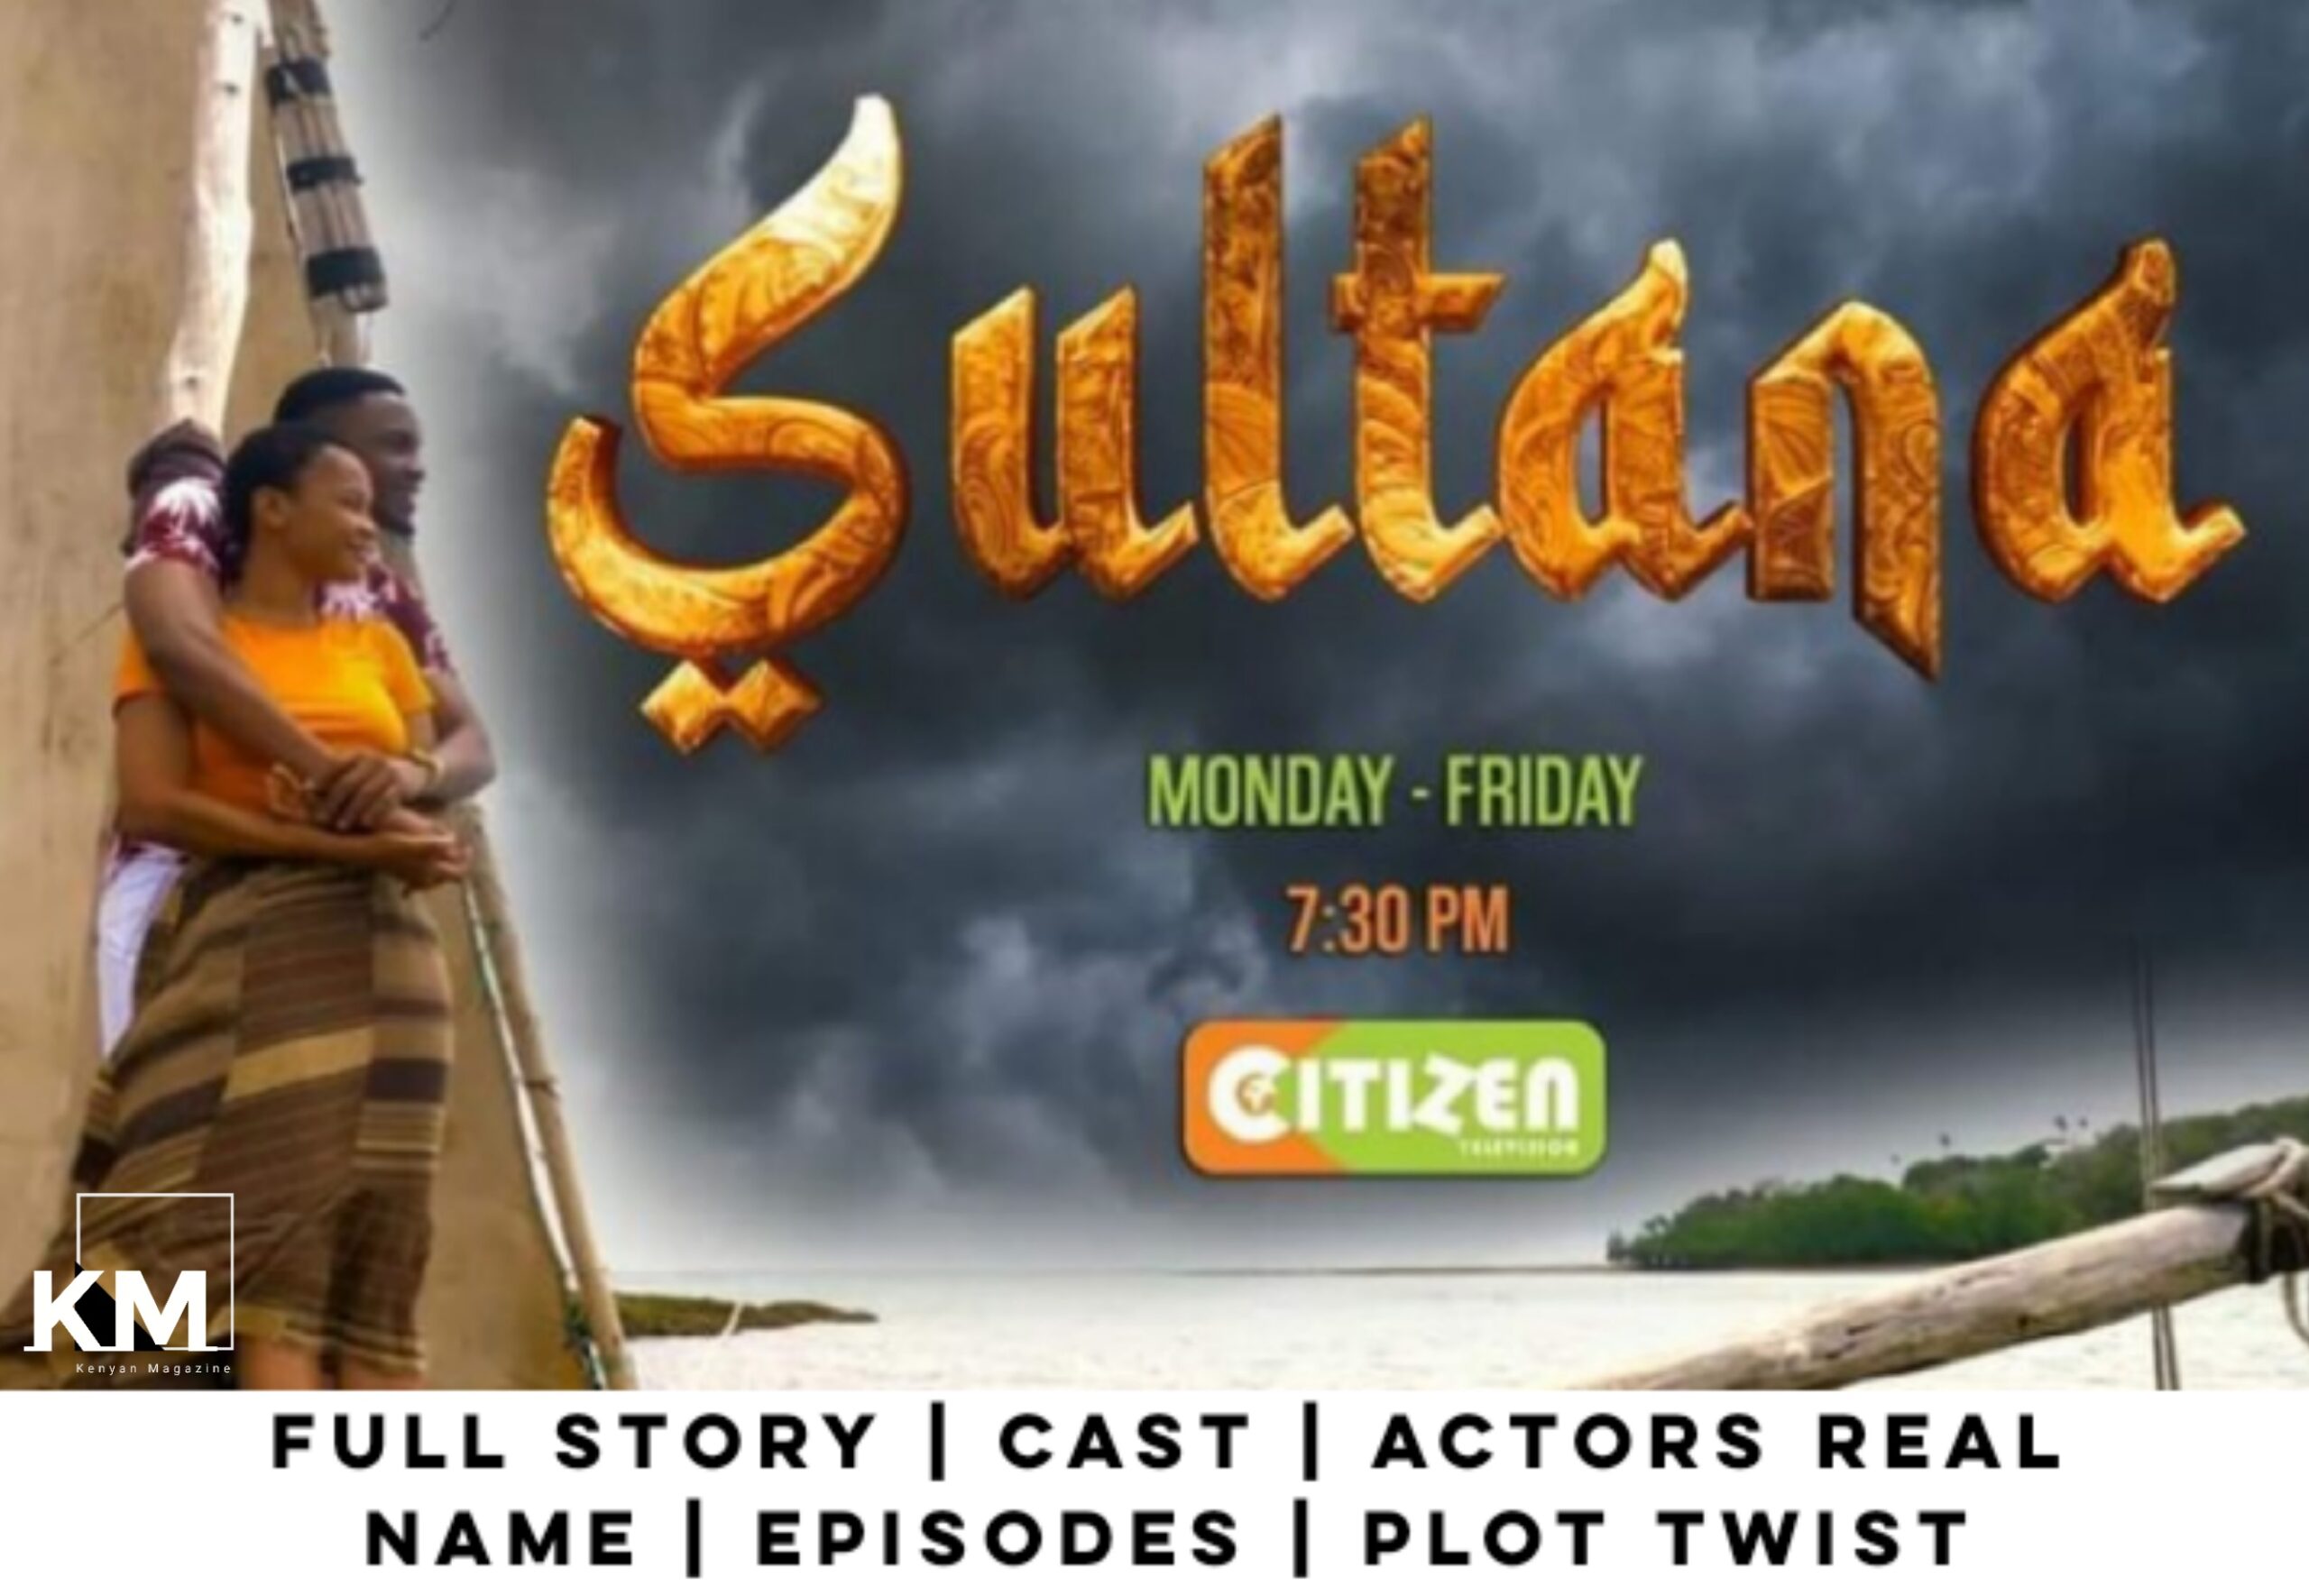 Sultana TV Series (Citizen TV)